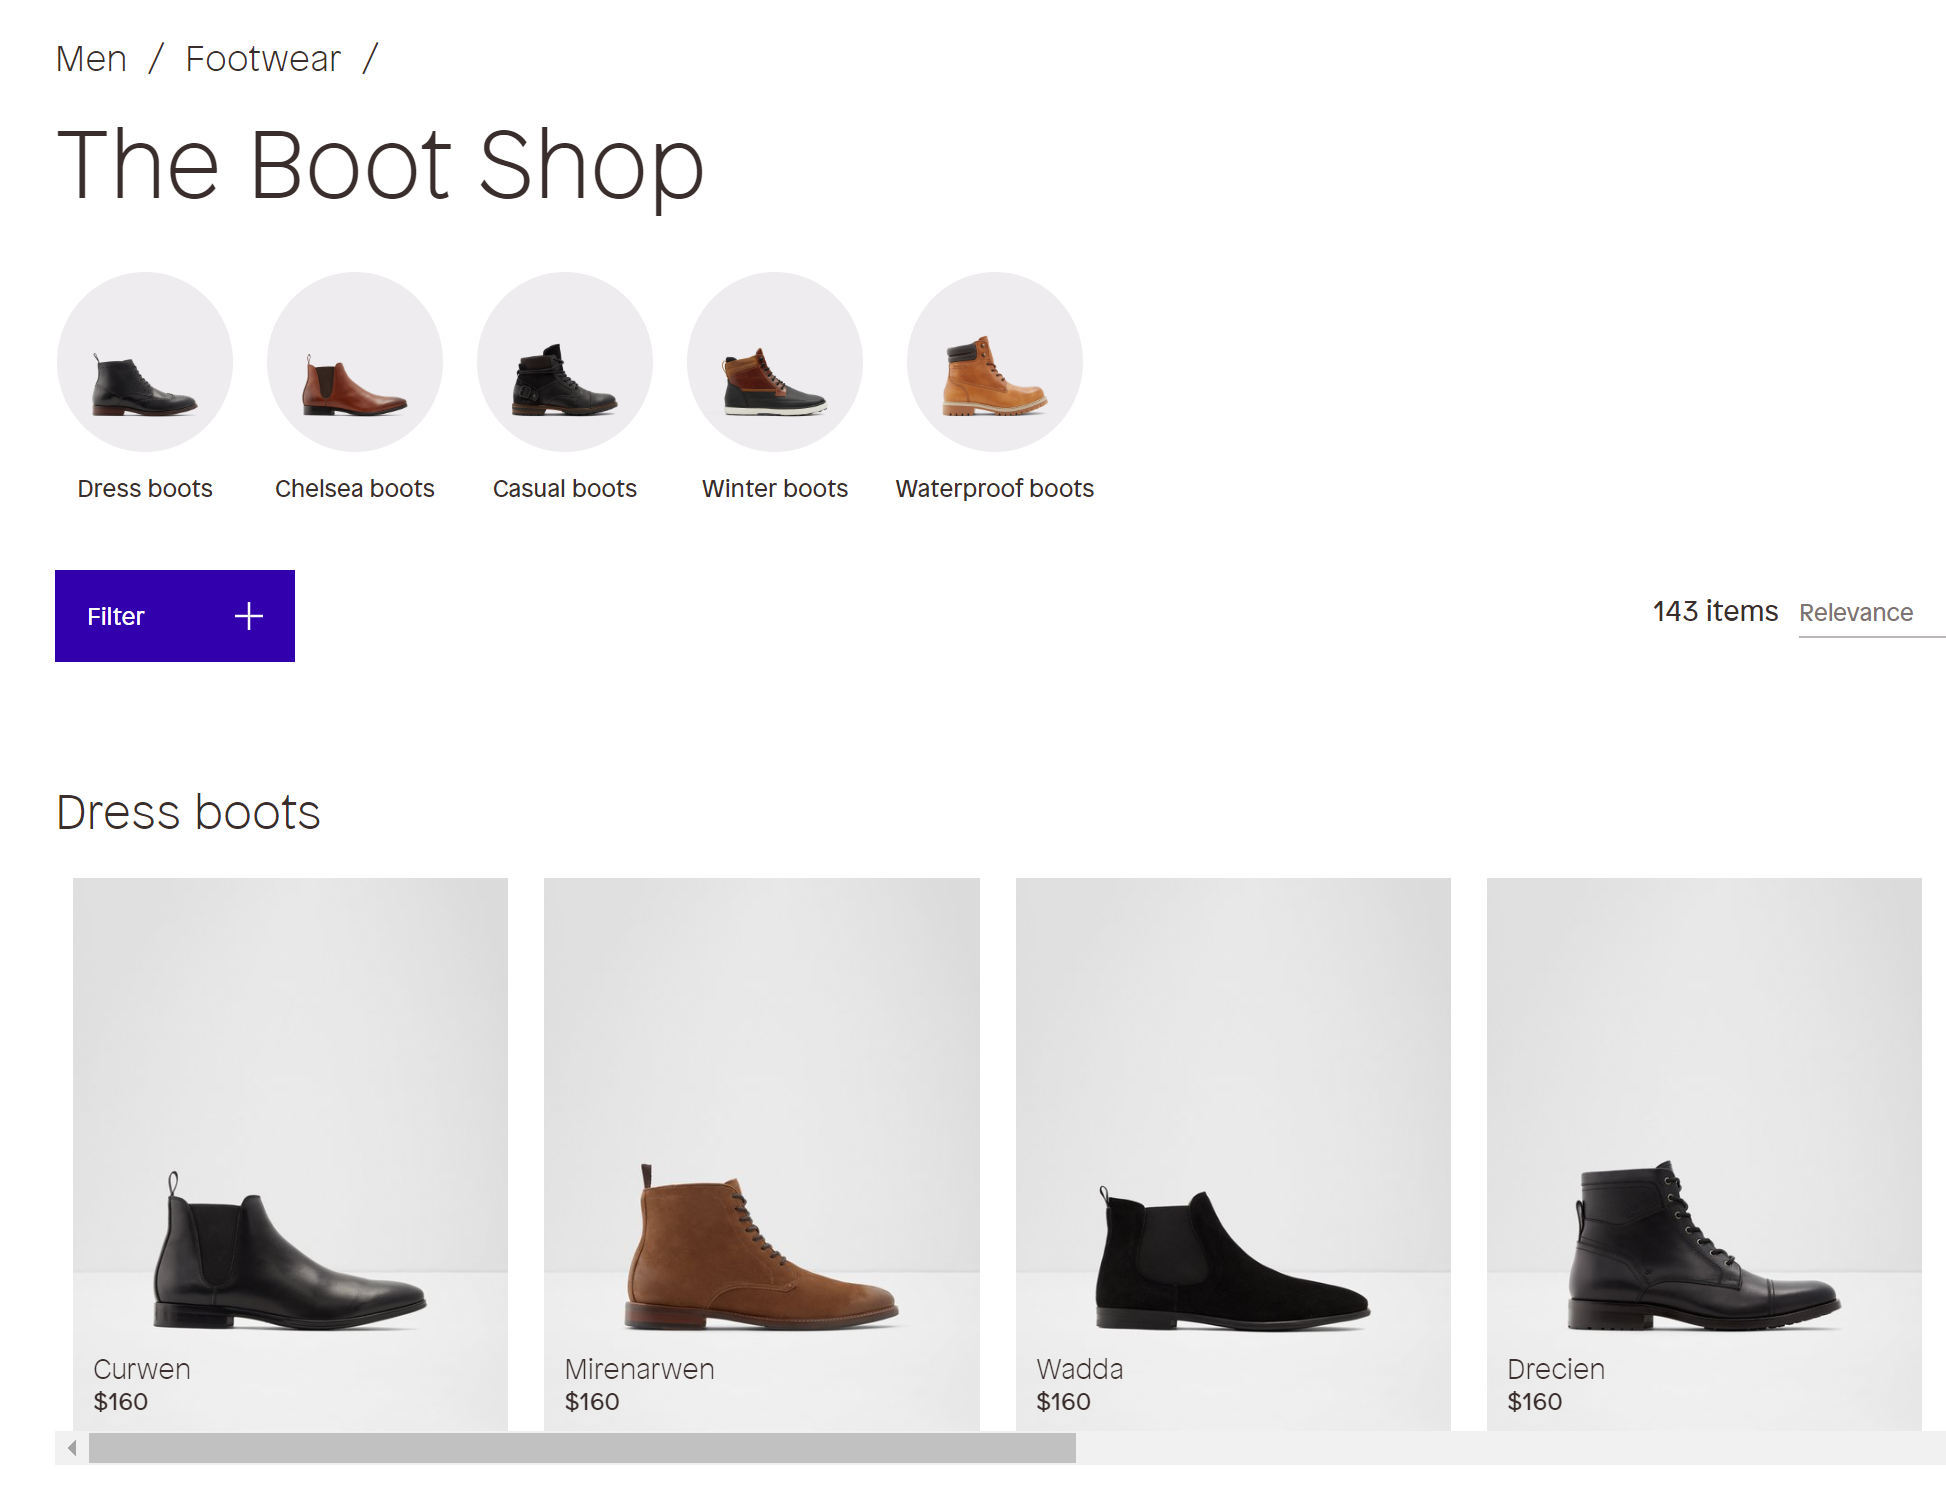 The Boot Shop on Aldo's website